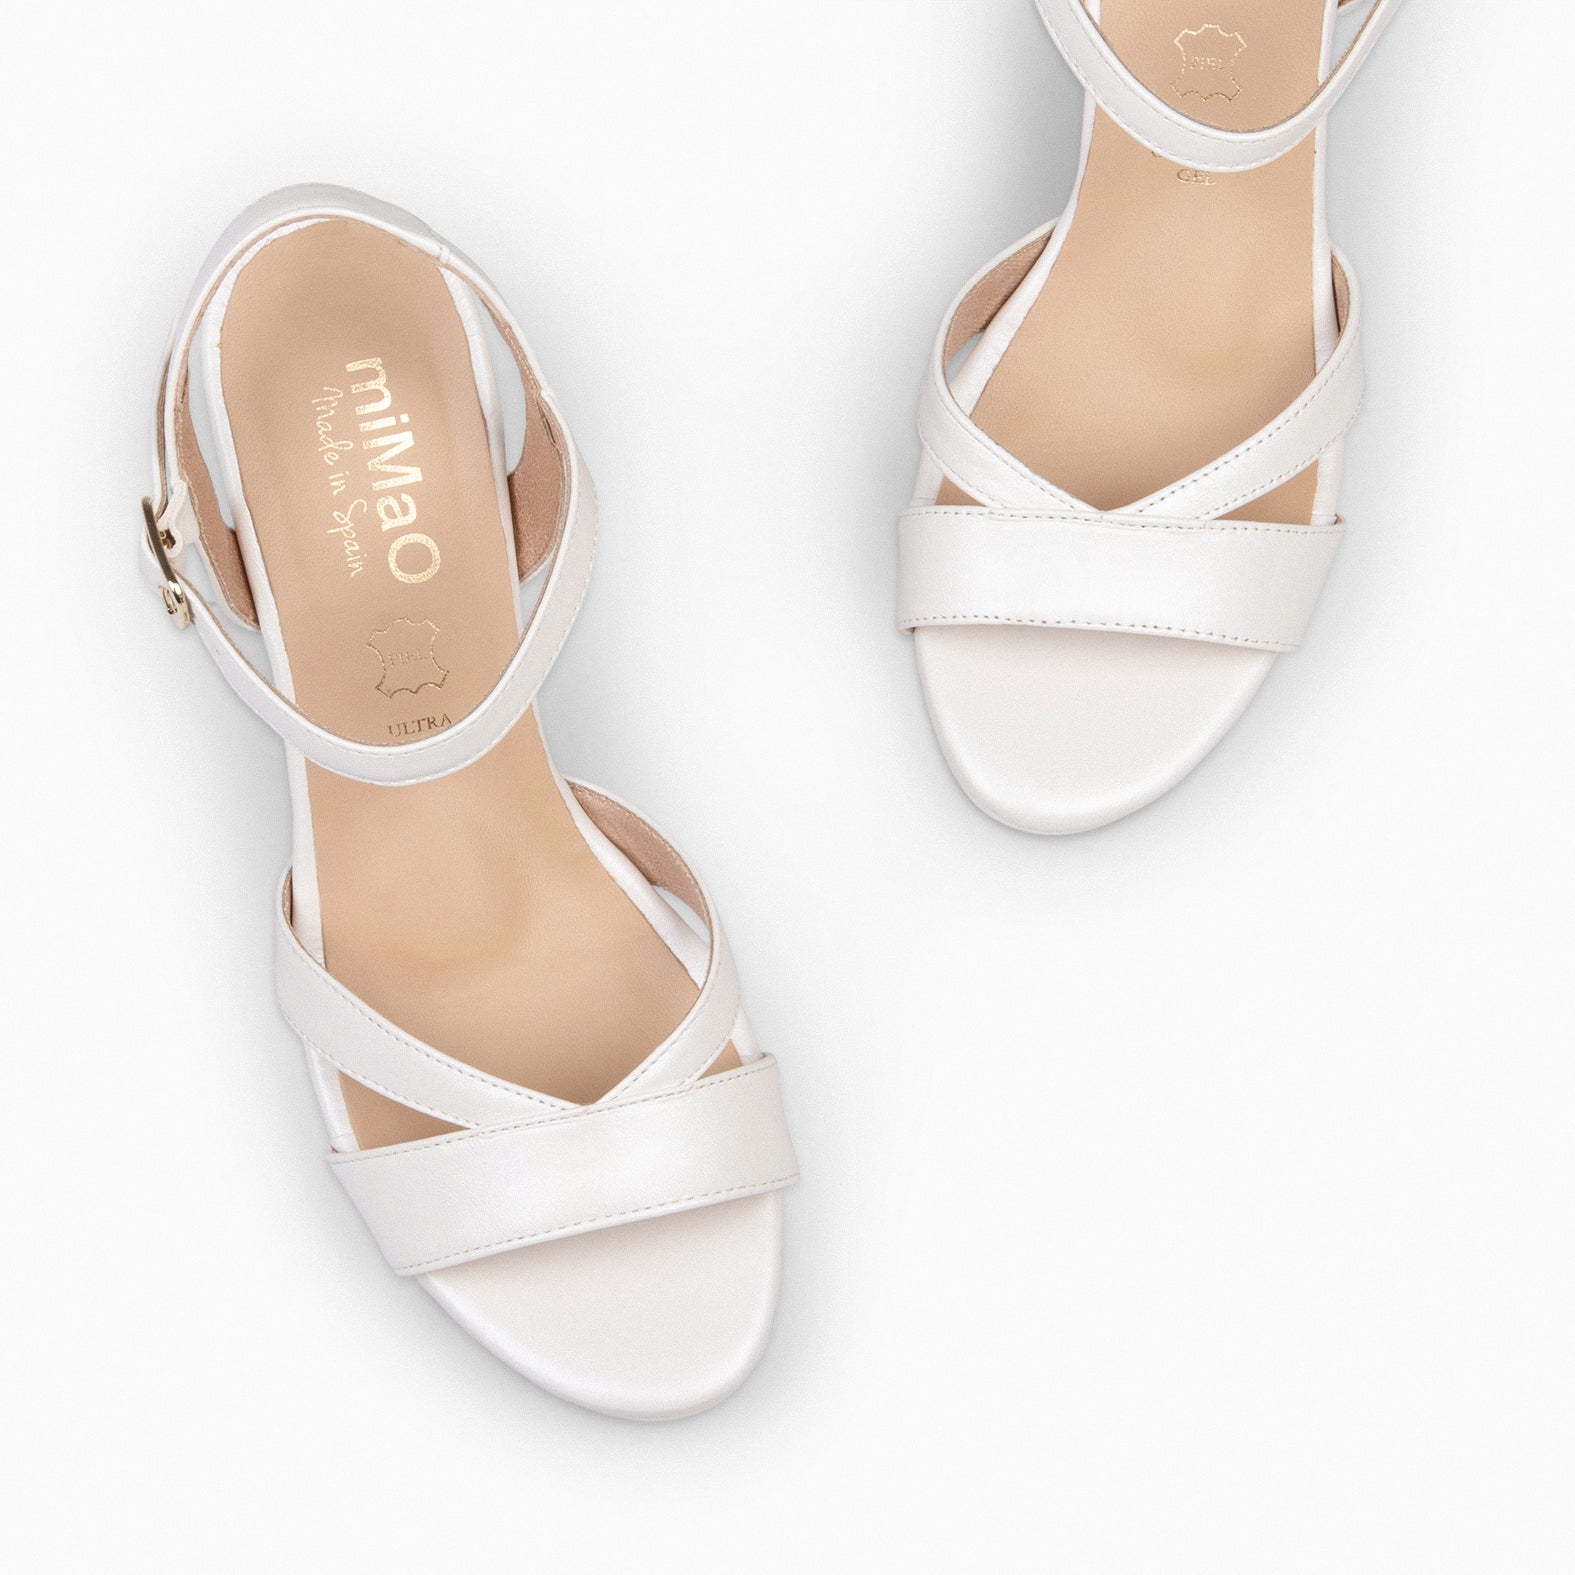 PARIS – PEARL high heel sandal with platform